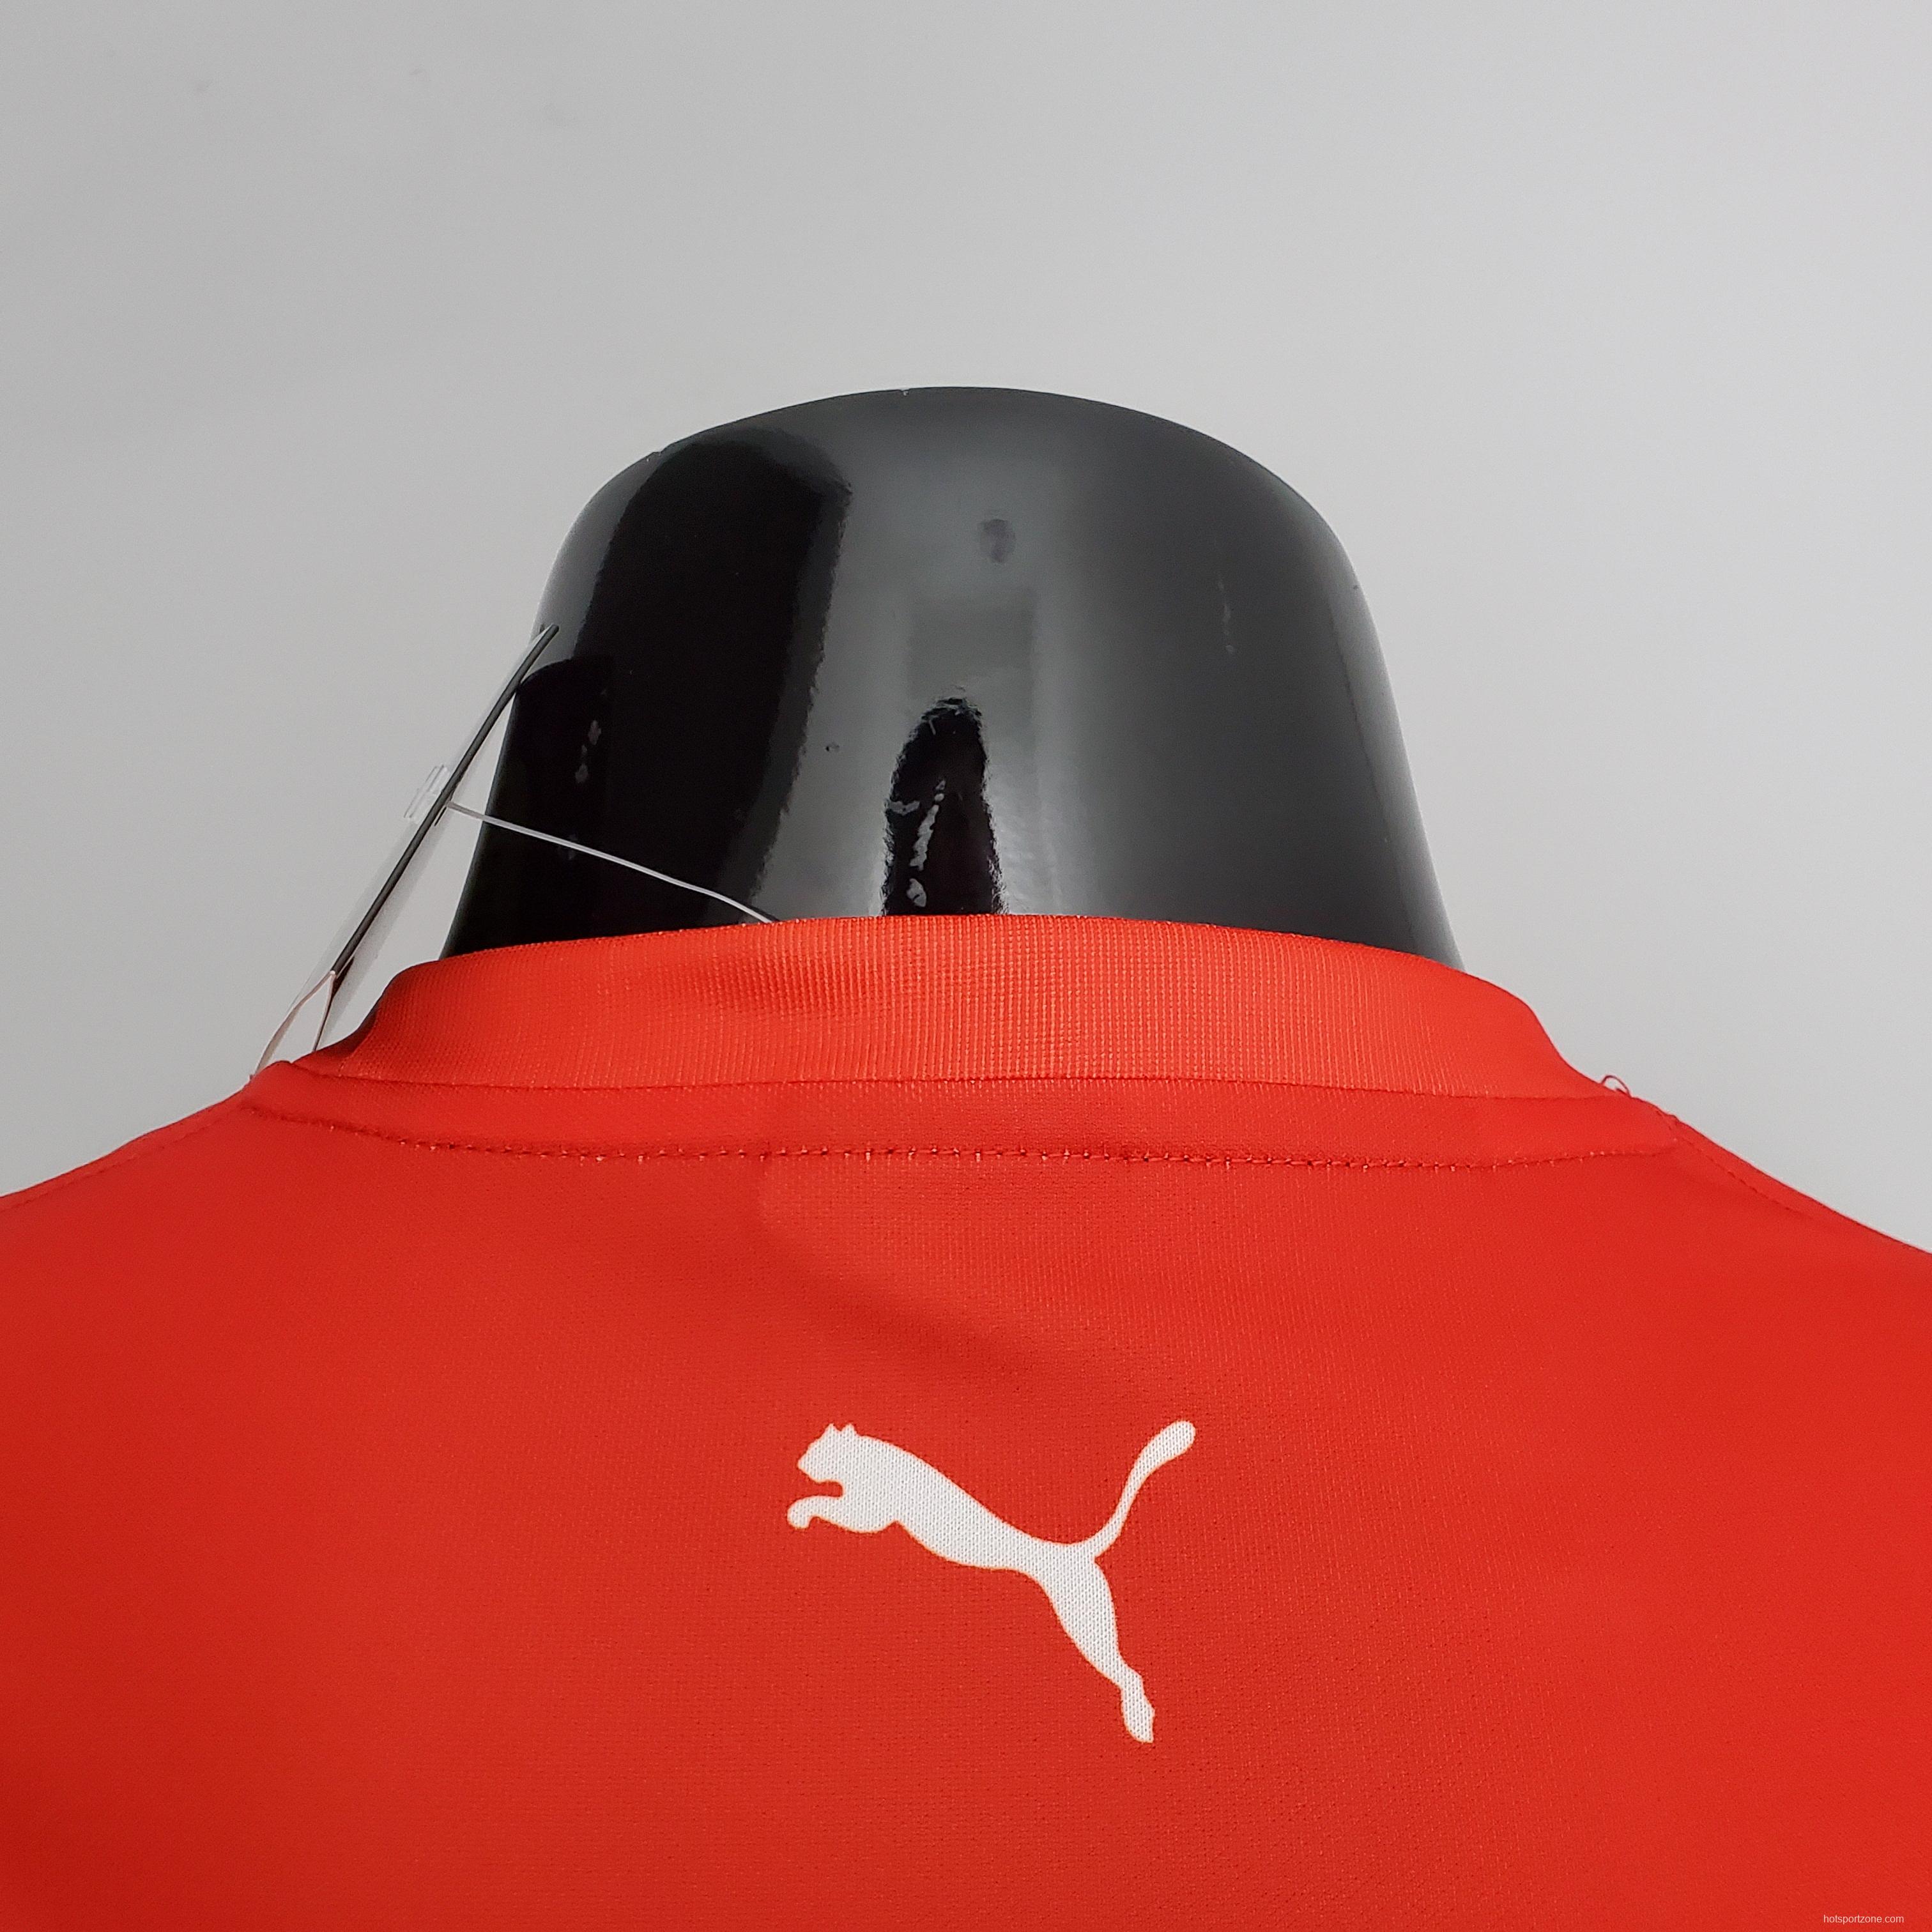 New F1 Formula One; Ferrari racing suit crew neck red S-5XL